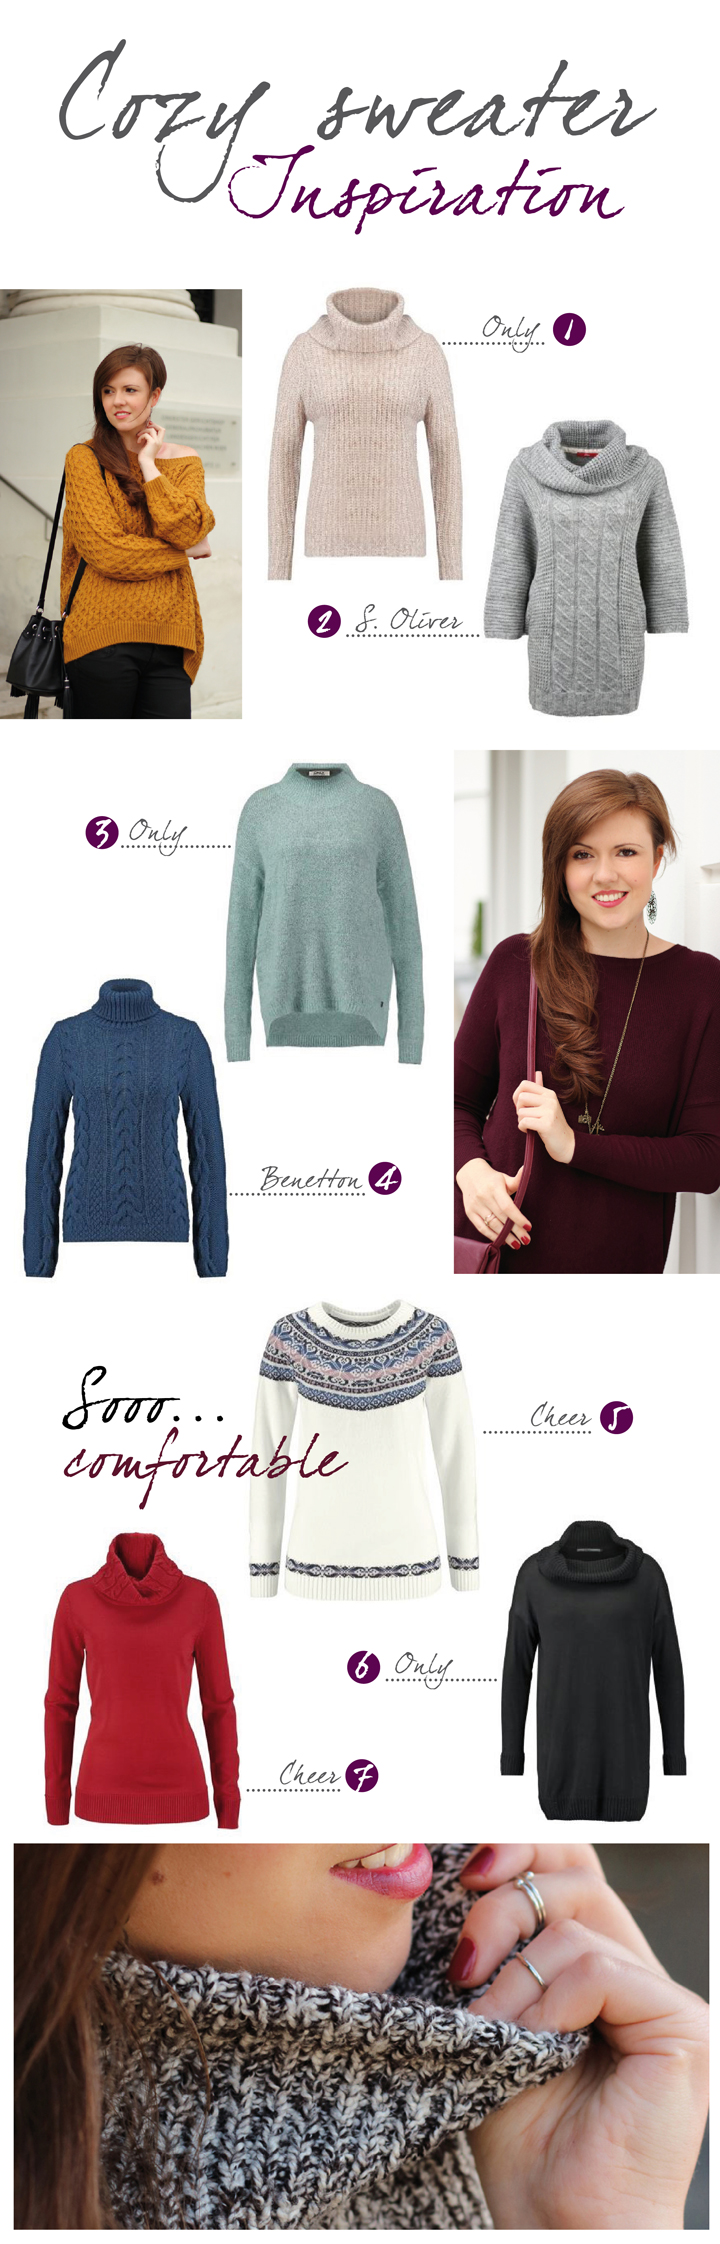 Justmyself_Fashionblog-pullover-herbst-trend-2015-rollkragenpullover-turtleneck-grau-rose-mint-blau-schwarz-rot